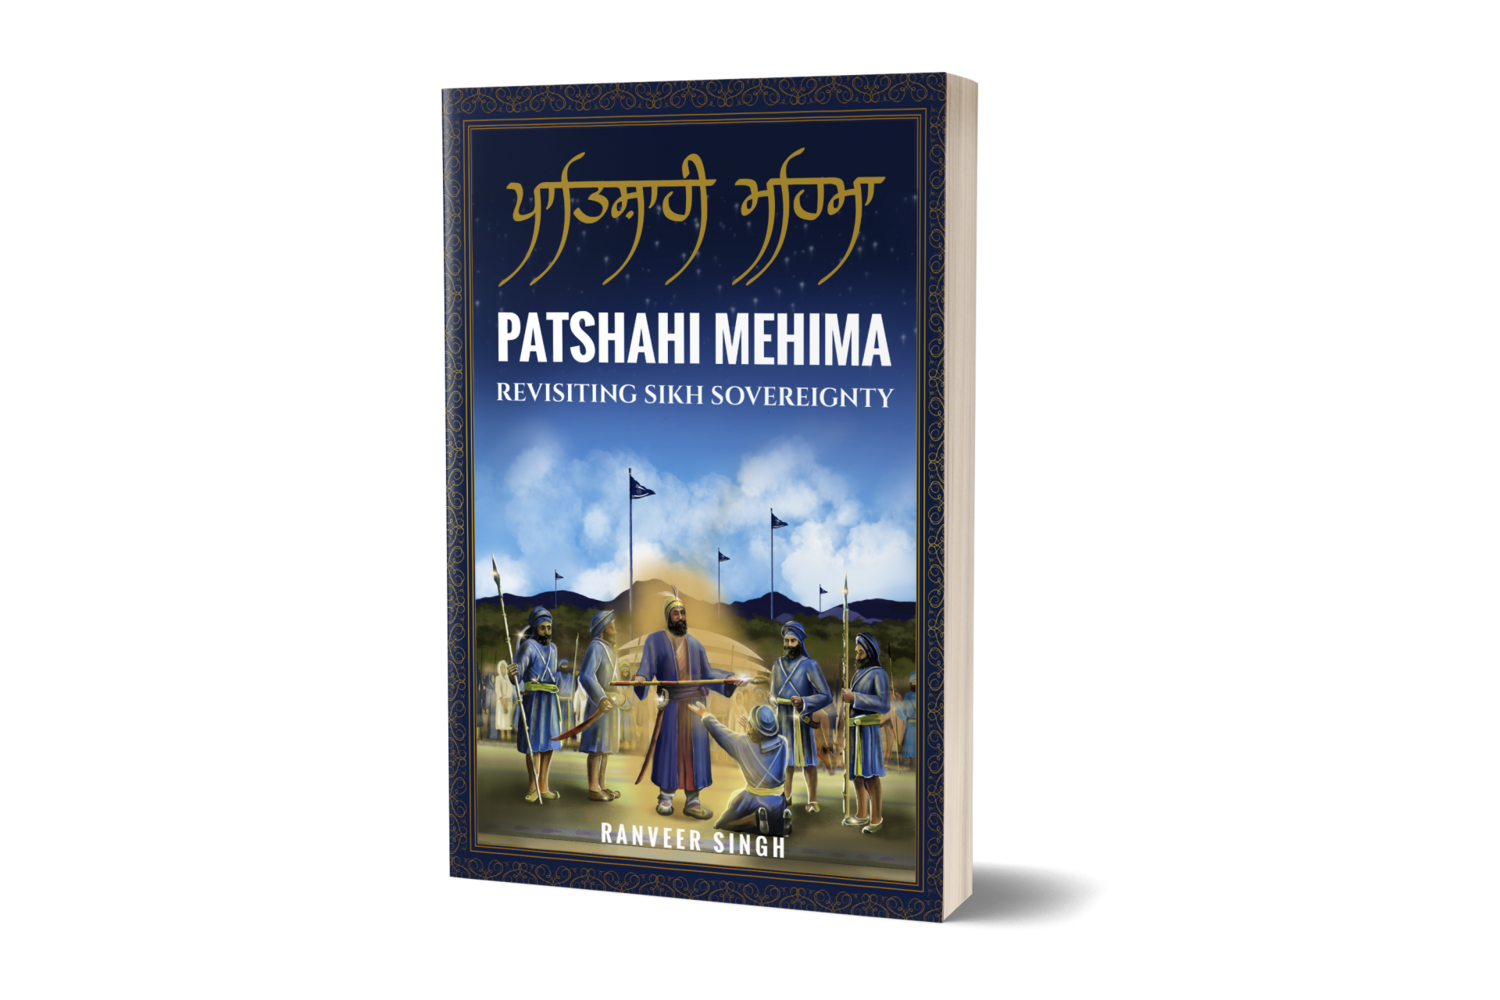 Patshahi Mehima - Revisiting Sikh Sovereignty